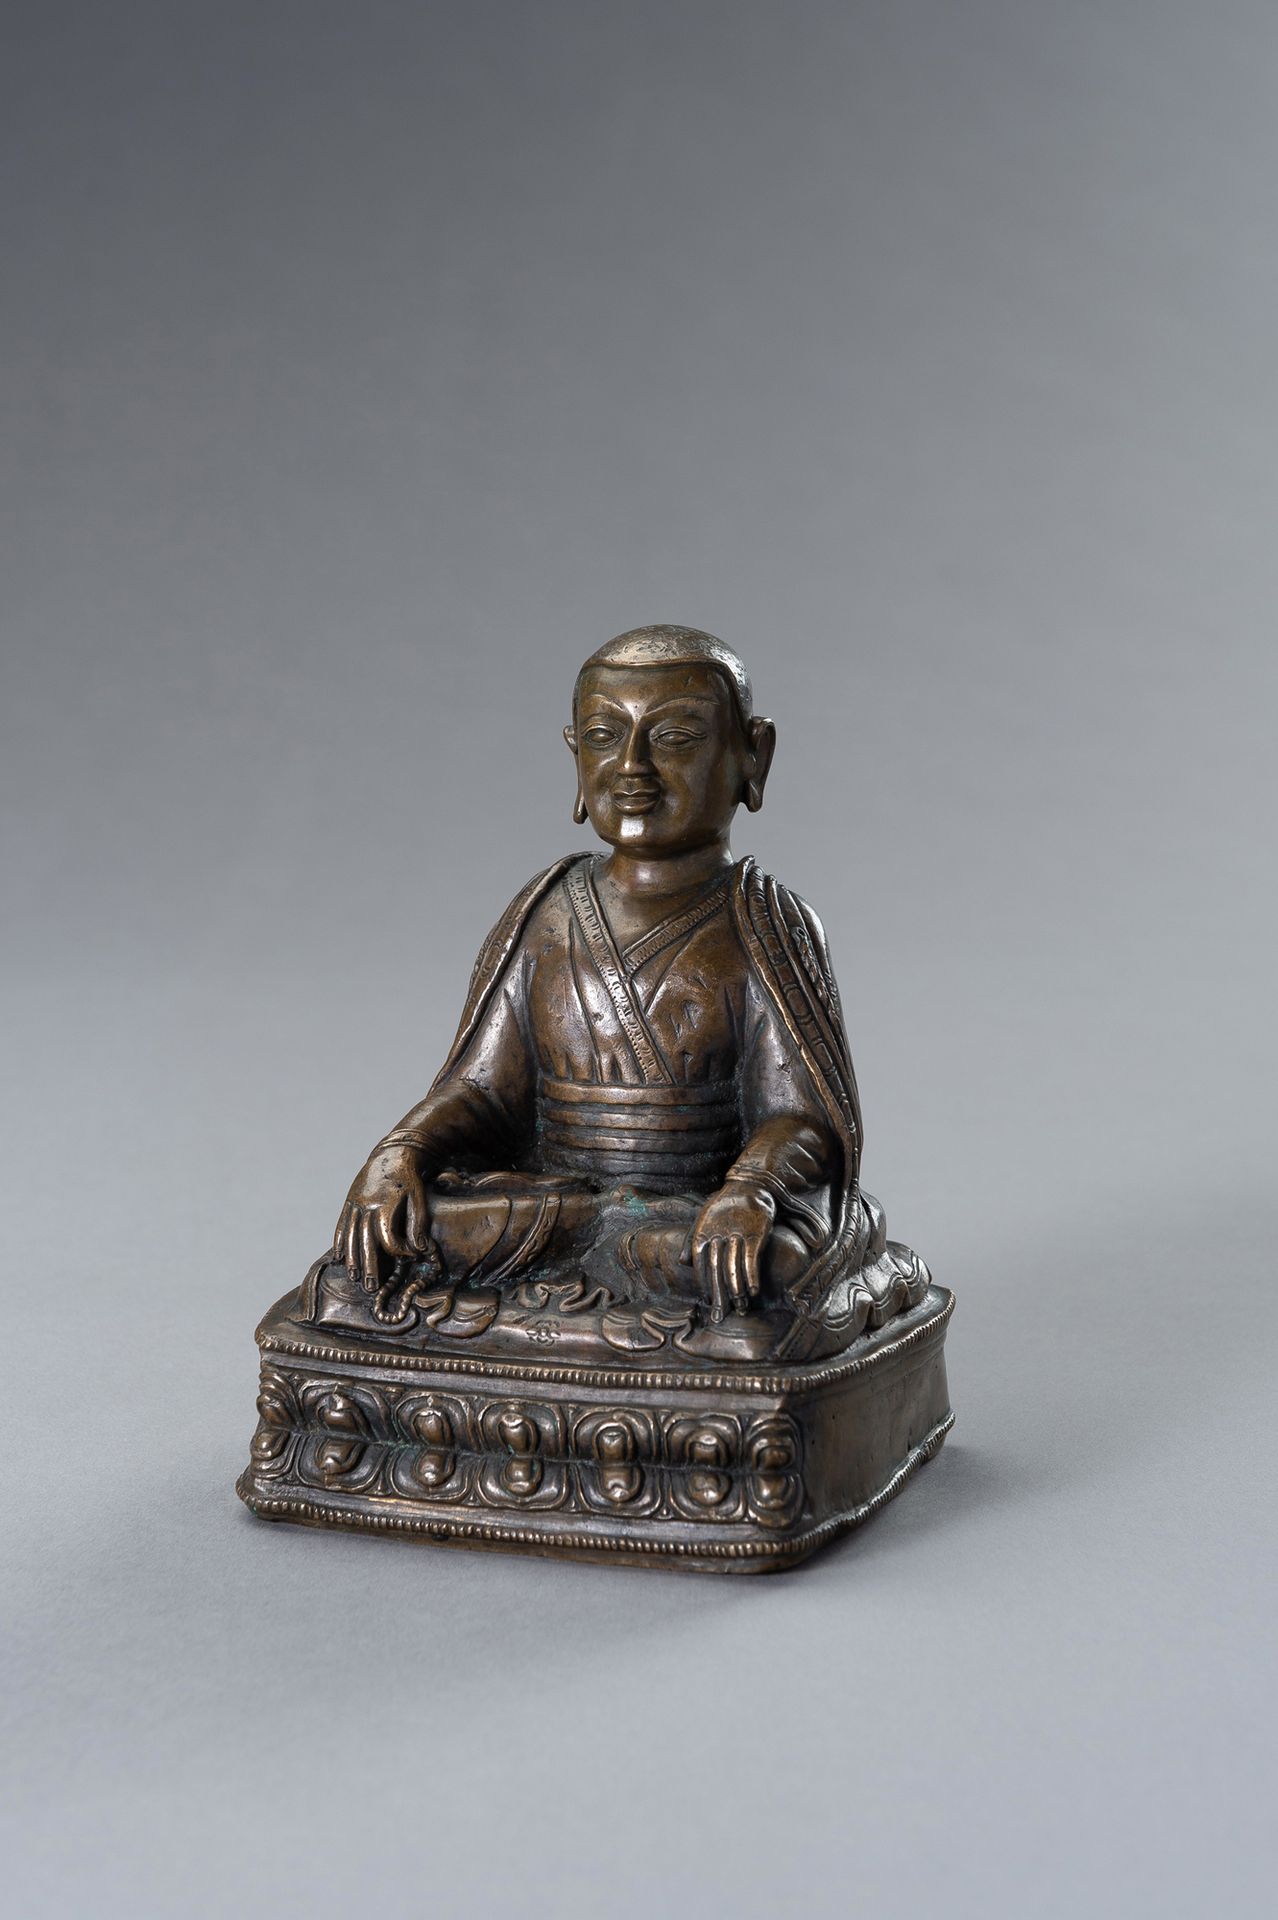 A Bronze figure of a Lama 喇嘛铜像
西藏，17至18世纪。坐在有珠边的双莲花座上，右手拿着祈祷珠，身穿飘逸的袍子。慈祥的脸，嘴唇抿成微&hellip;